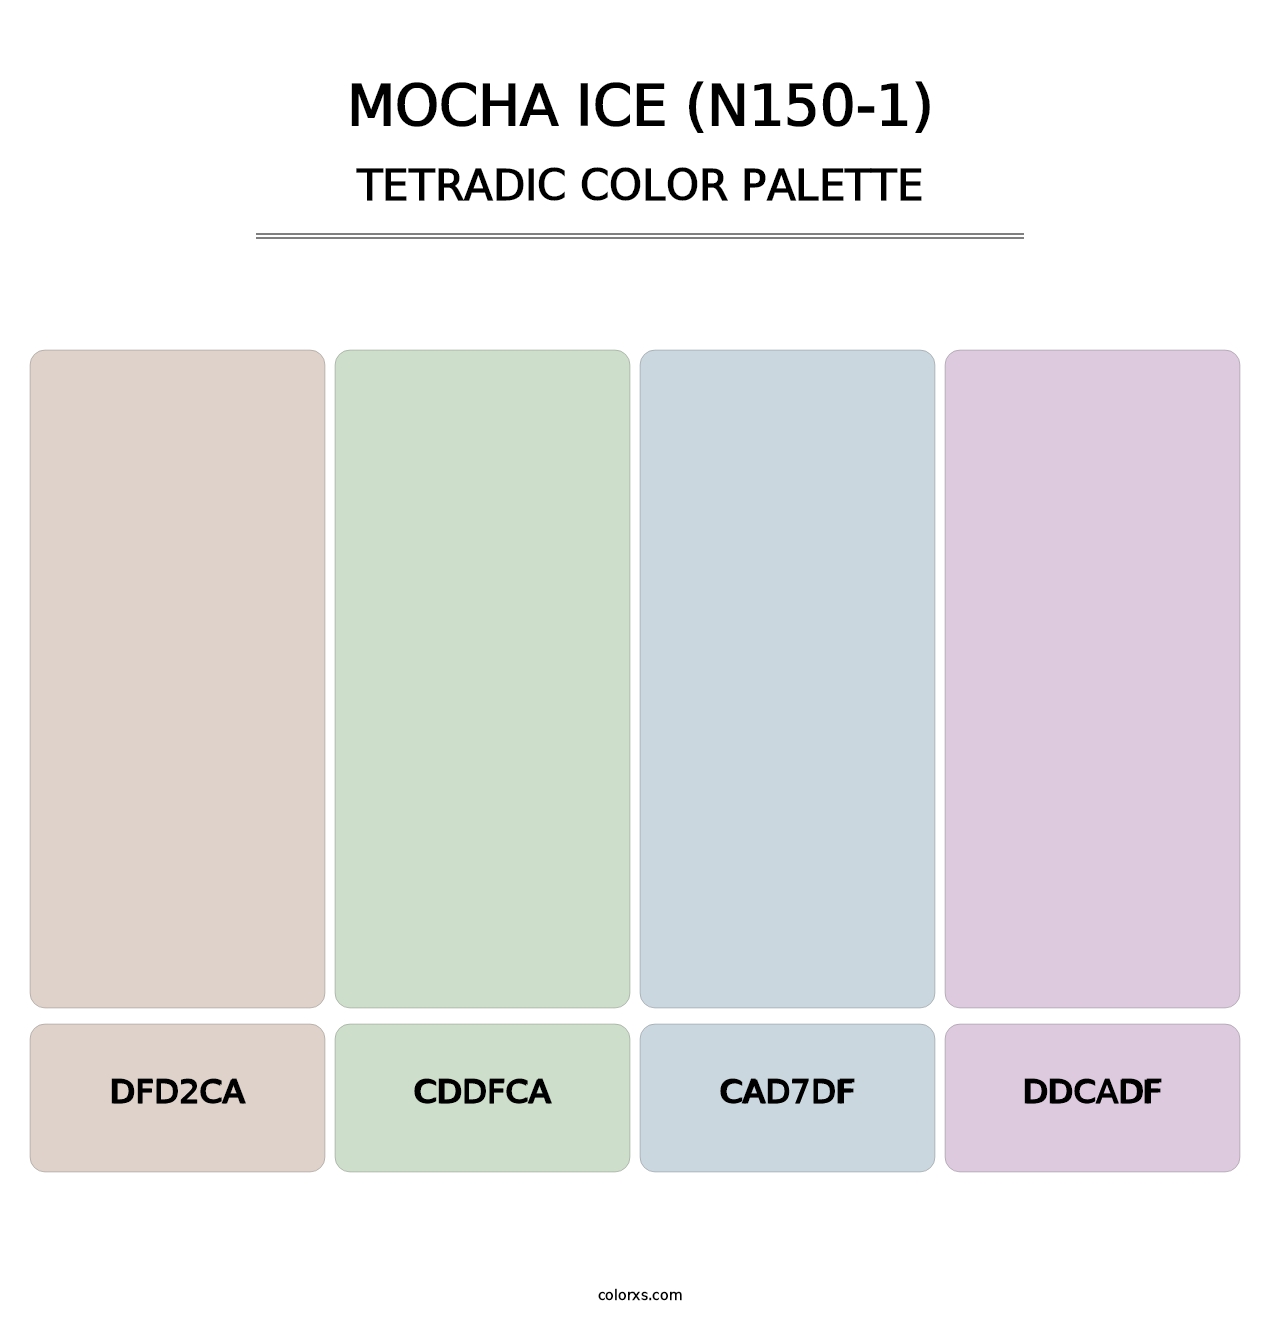 Mocha Ice (N150-1) - Tetradic Color Palette